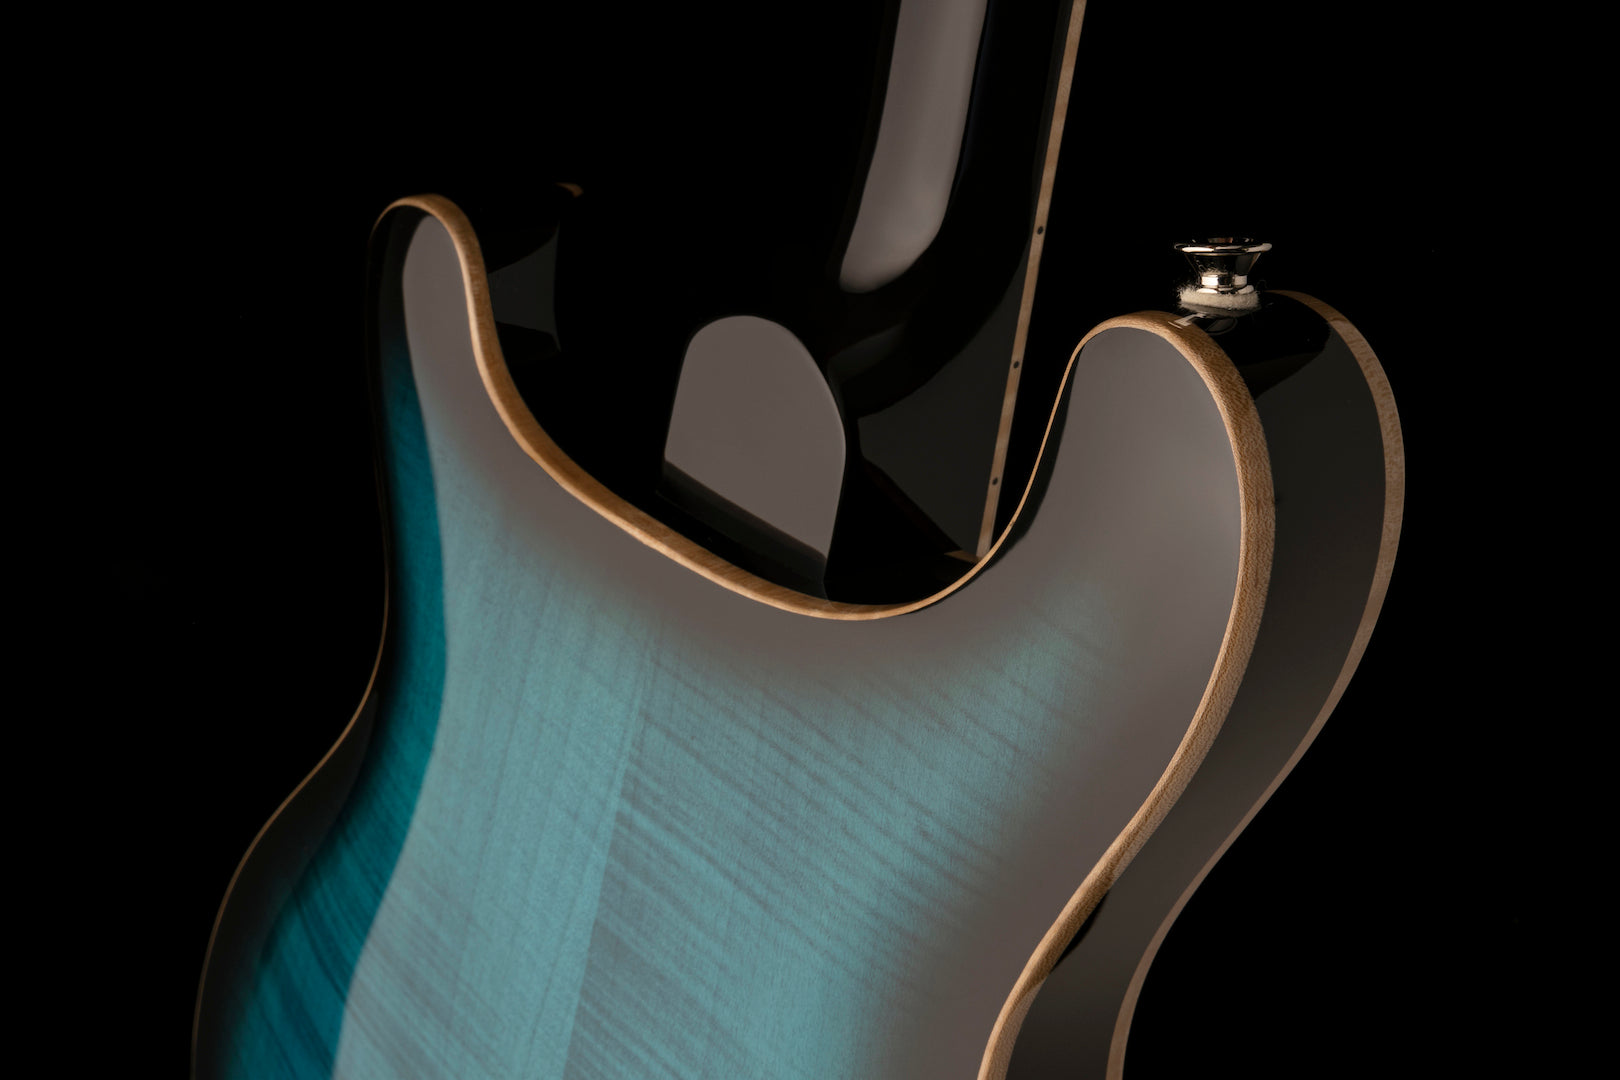 PRS SE Hollowbody II Piezo Electric Guitar (Peacock Blue)